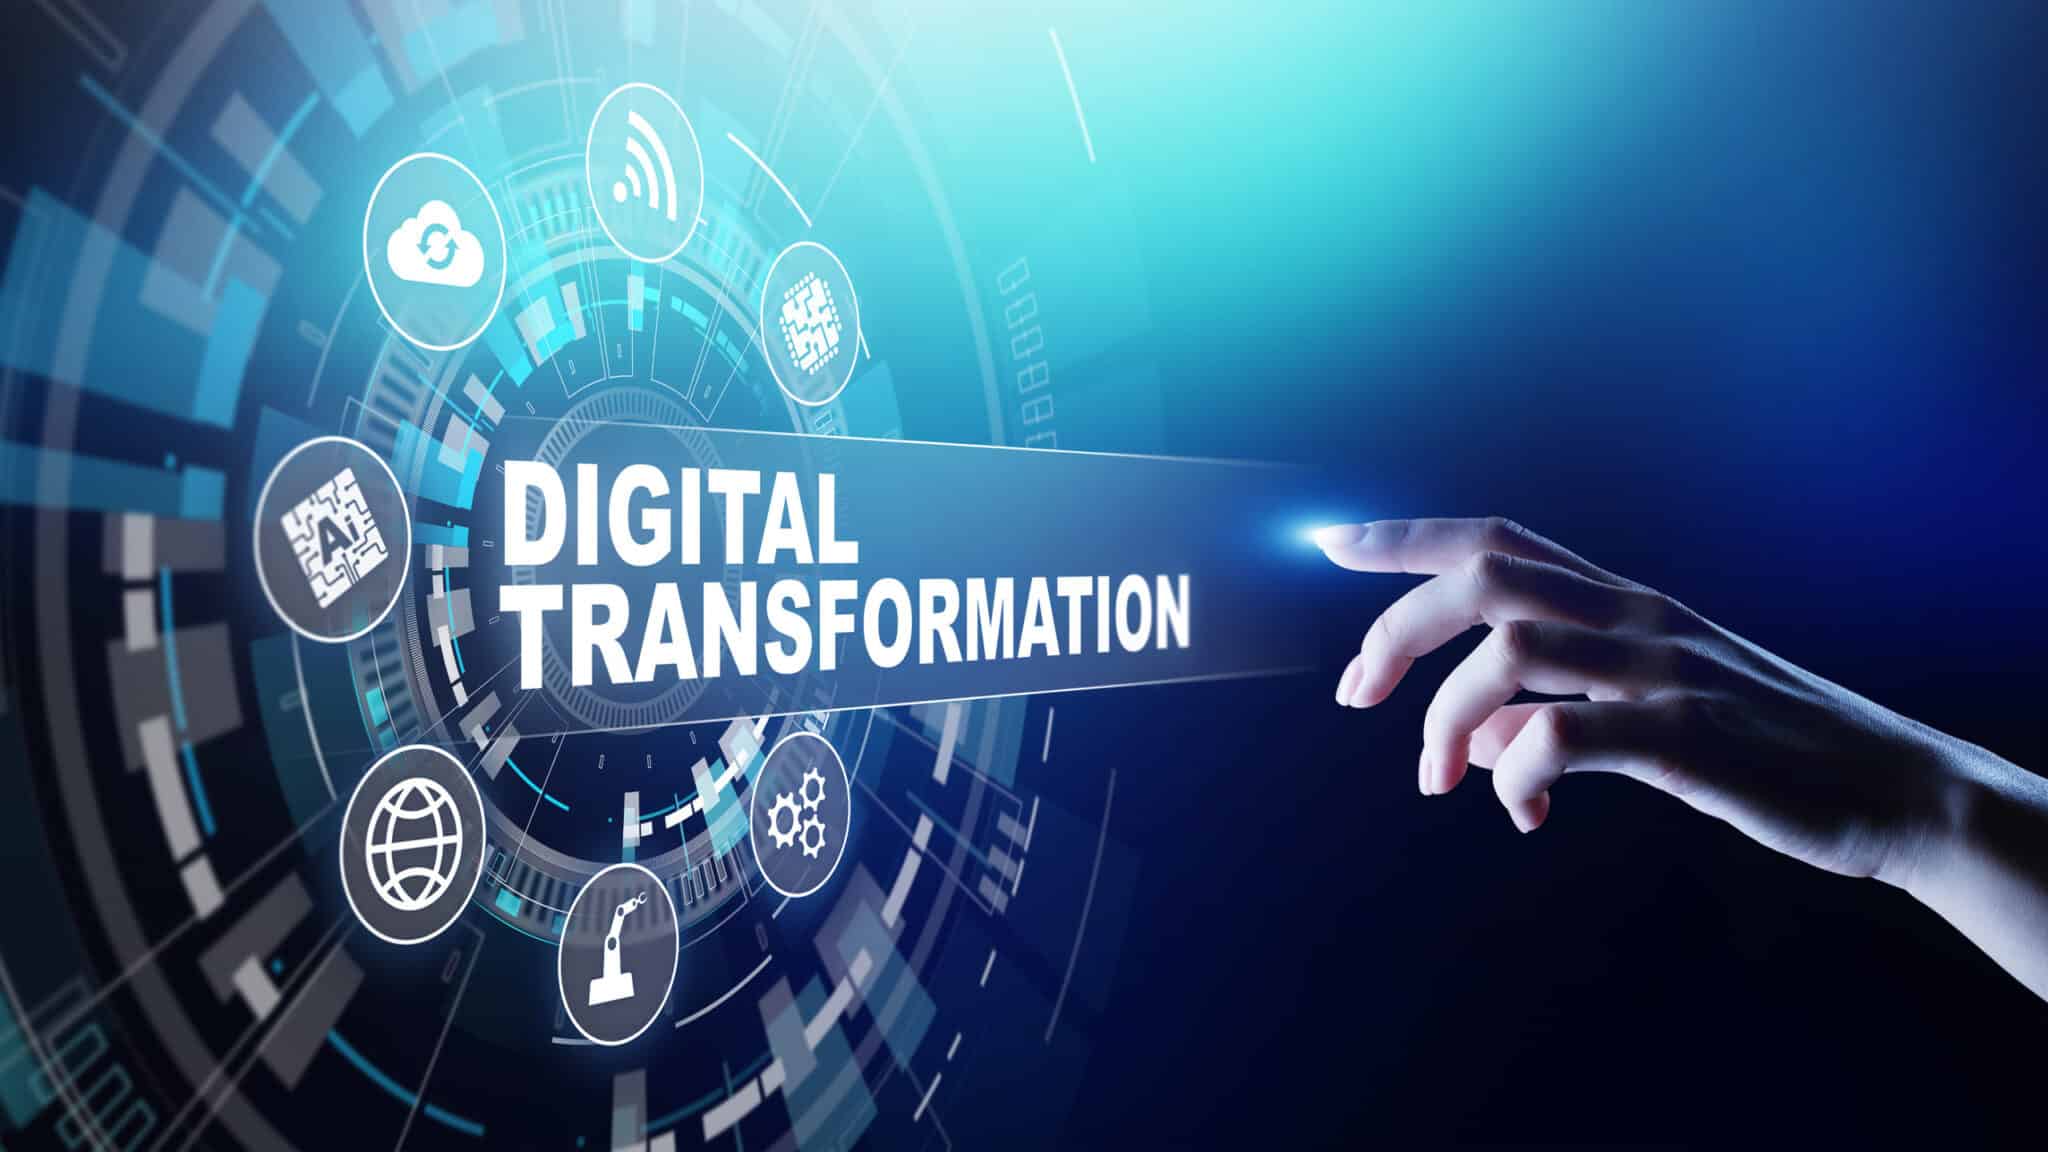 IntelliShift is undergoing a digital transformation